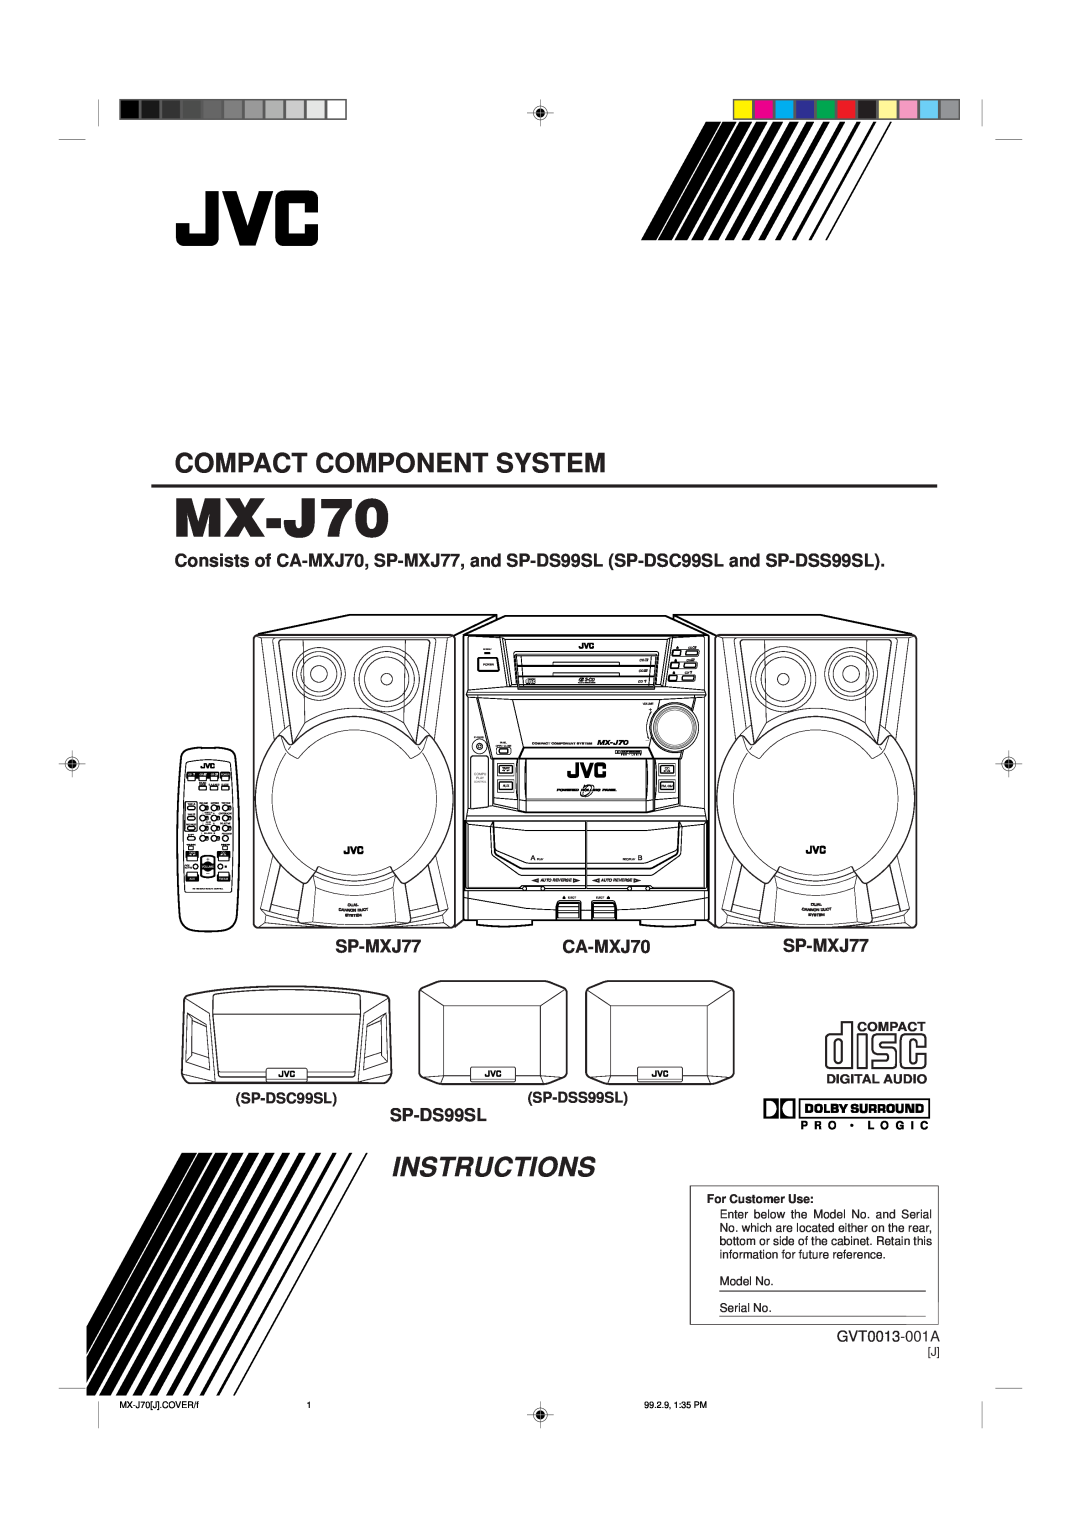 JVC Model MX-J70J manual Instructions, SP-MXJ77, CA-MXJ70, SP-DS99SL, SP-DSC99SL, SP-DSS99SL, GVT0013-001A, Auto Reverse 